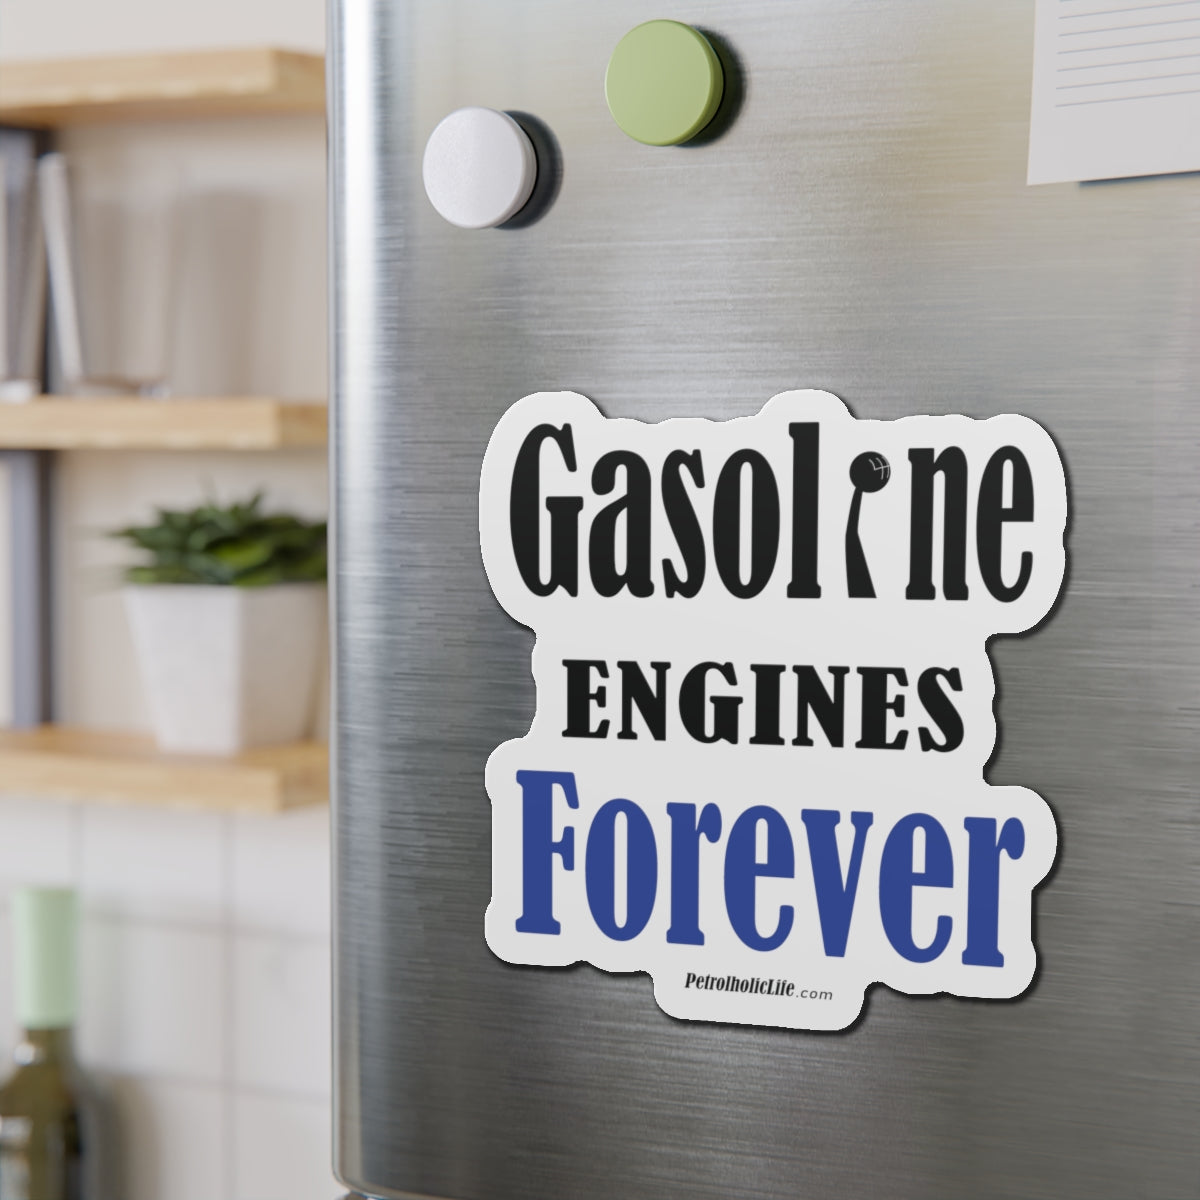 Gasoline Engines Forever - Die-Cut Magnets